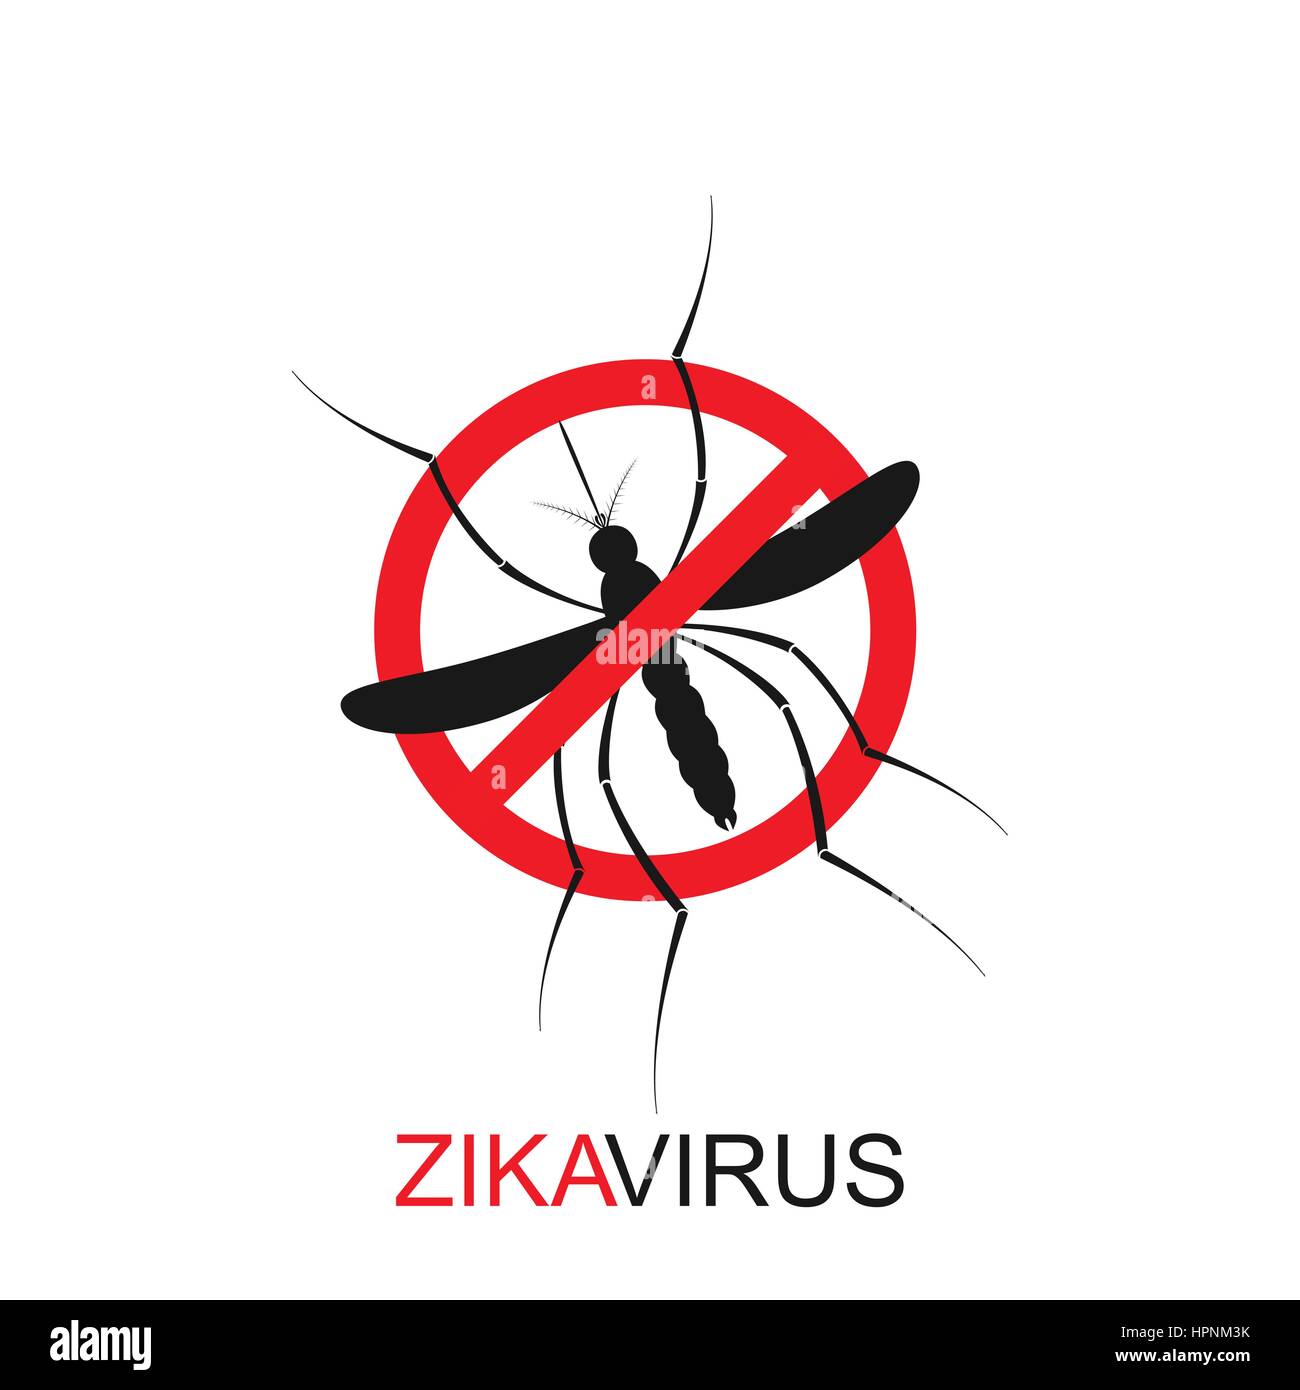 Zika Moskito Abbildung. Zika Virus-Alarm. Zika Virus Konzept. Zika Virus Mückenstich. Aedes Aegypti isoliert auf weißem Hintergrund Stock Vektor